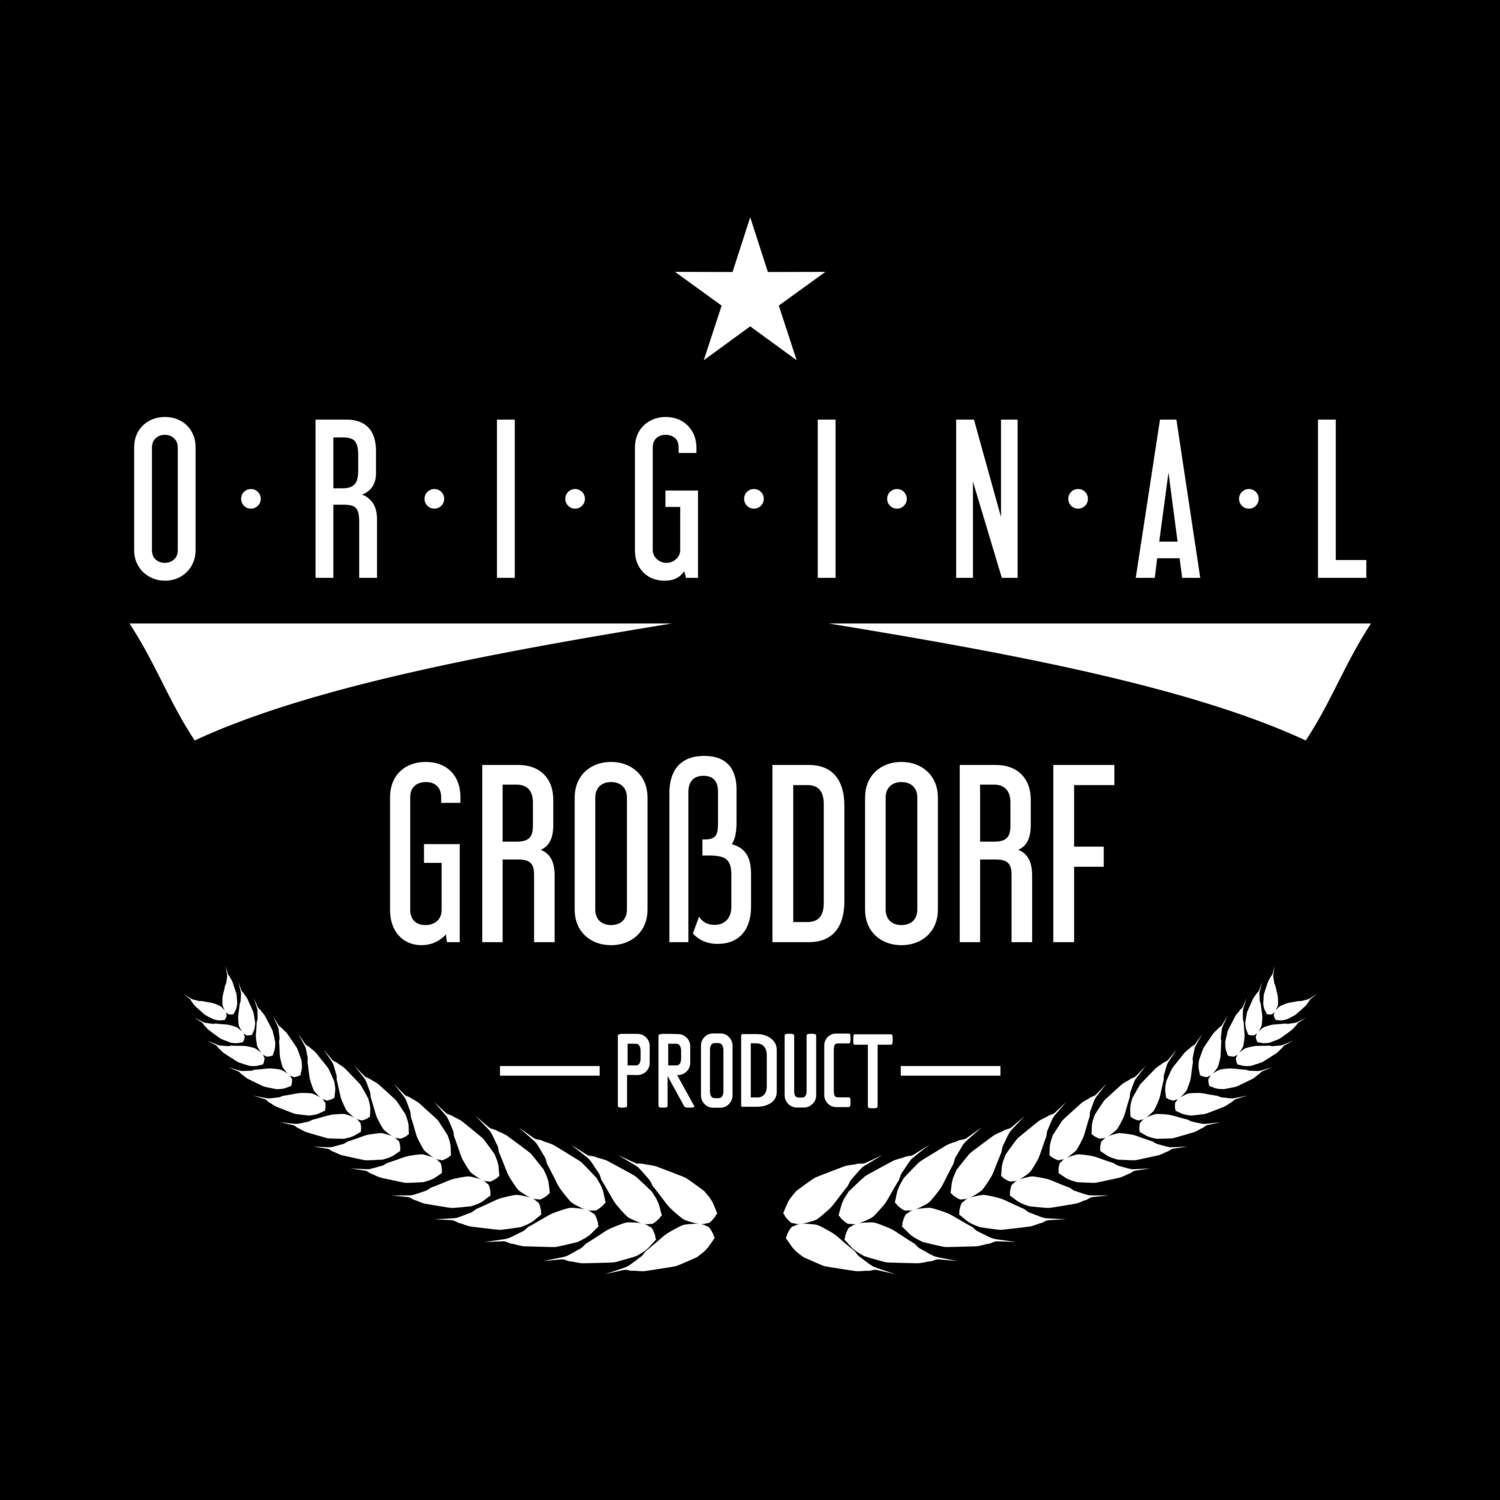 Großdorf T-Shirt »Original Product«